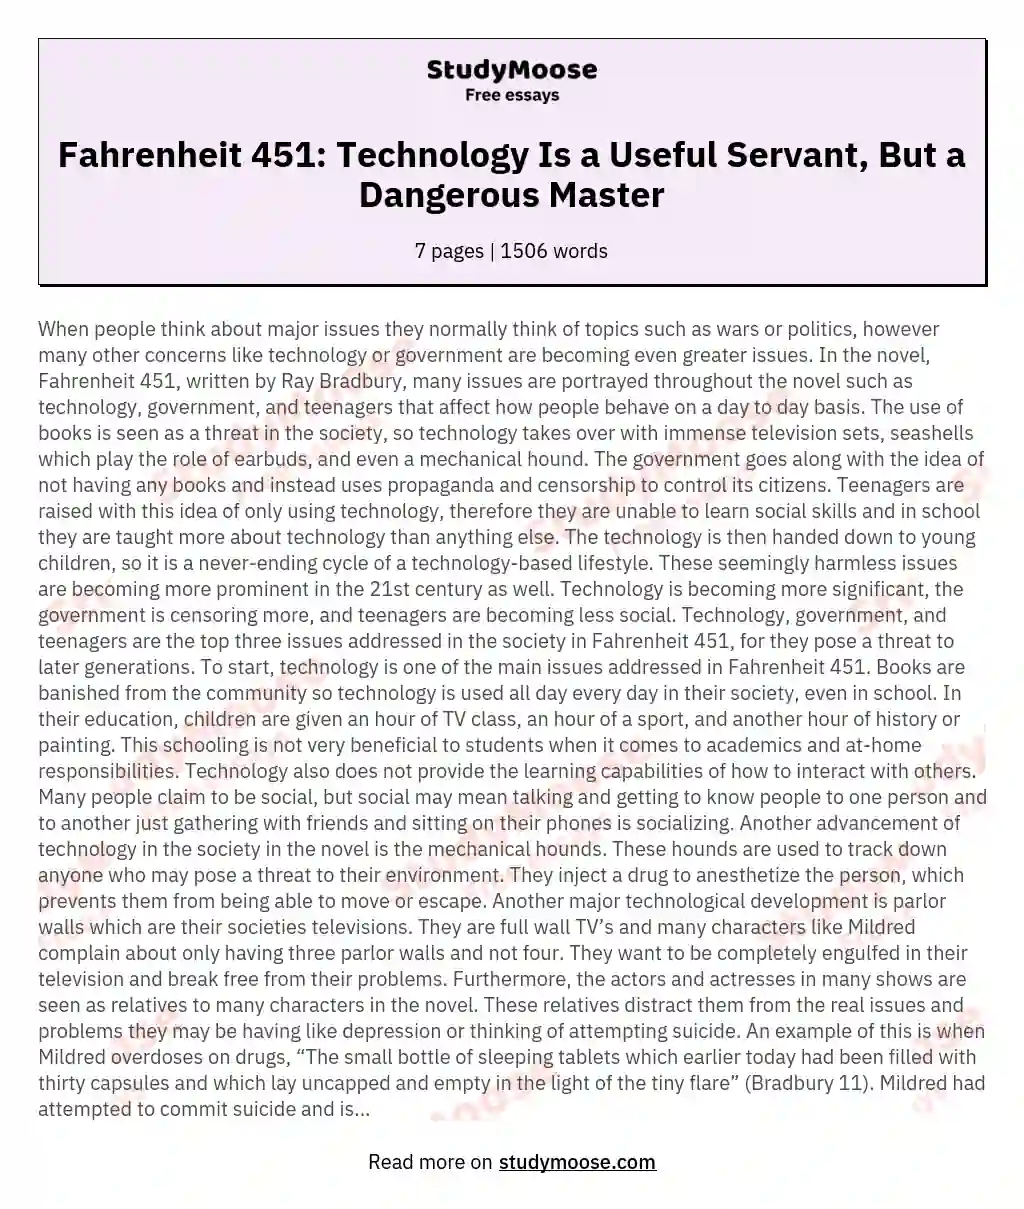 Fahrenheit 451: Technology Is a Useful Servant, But a Dangerous Master